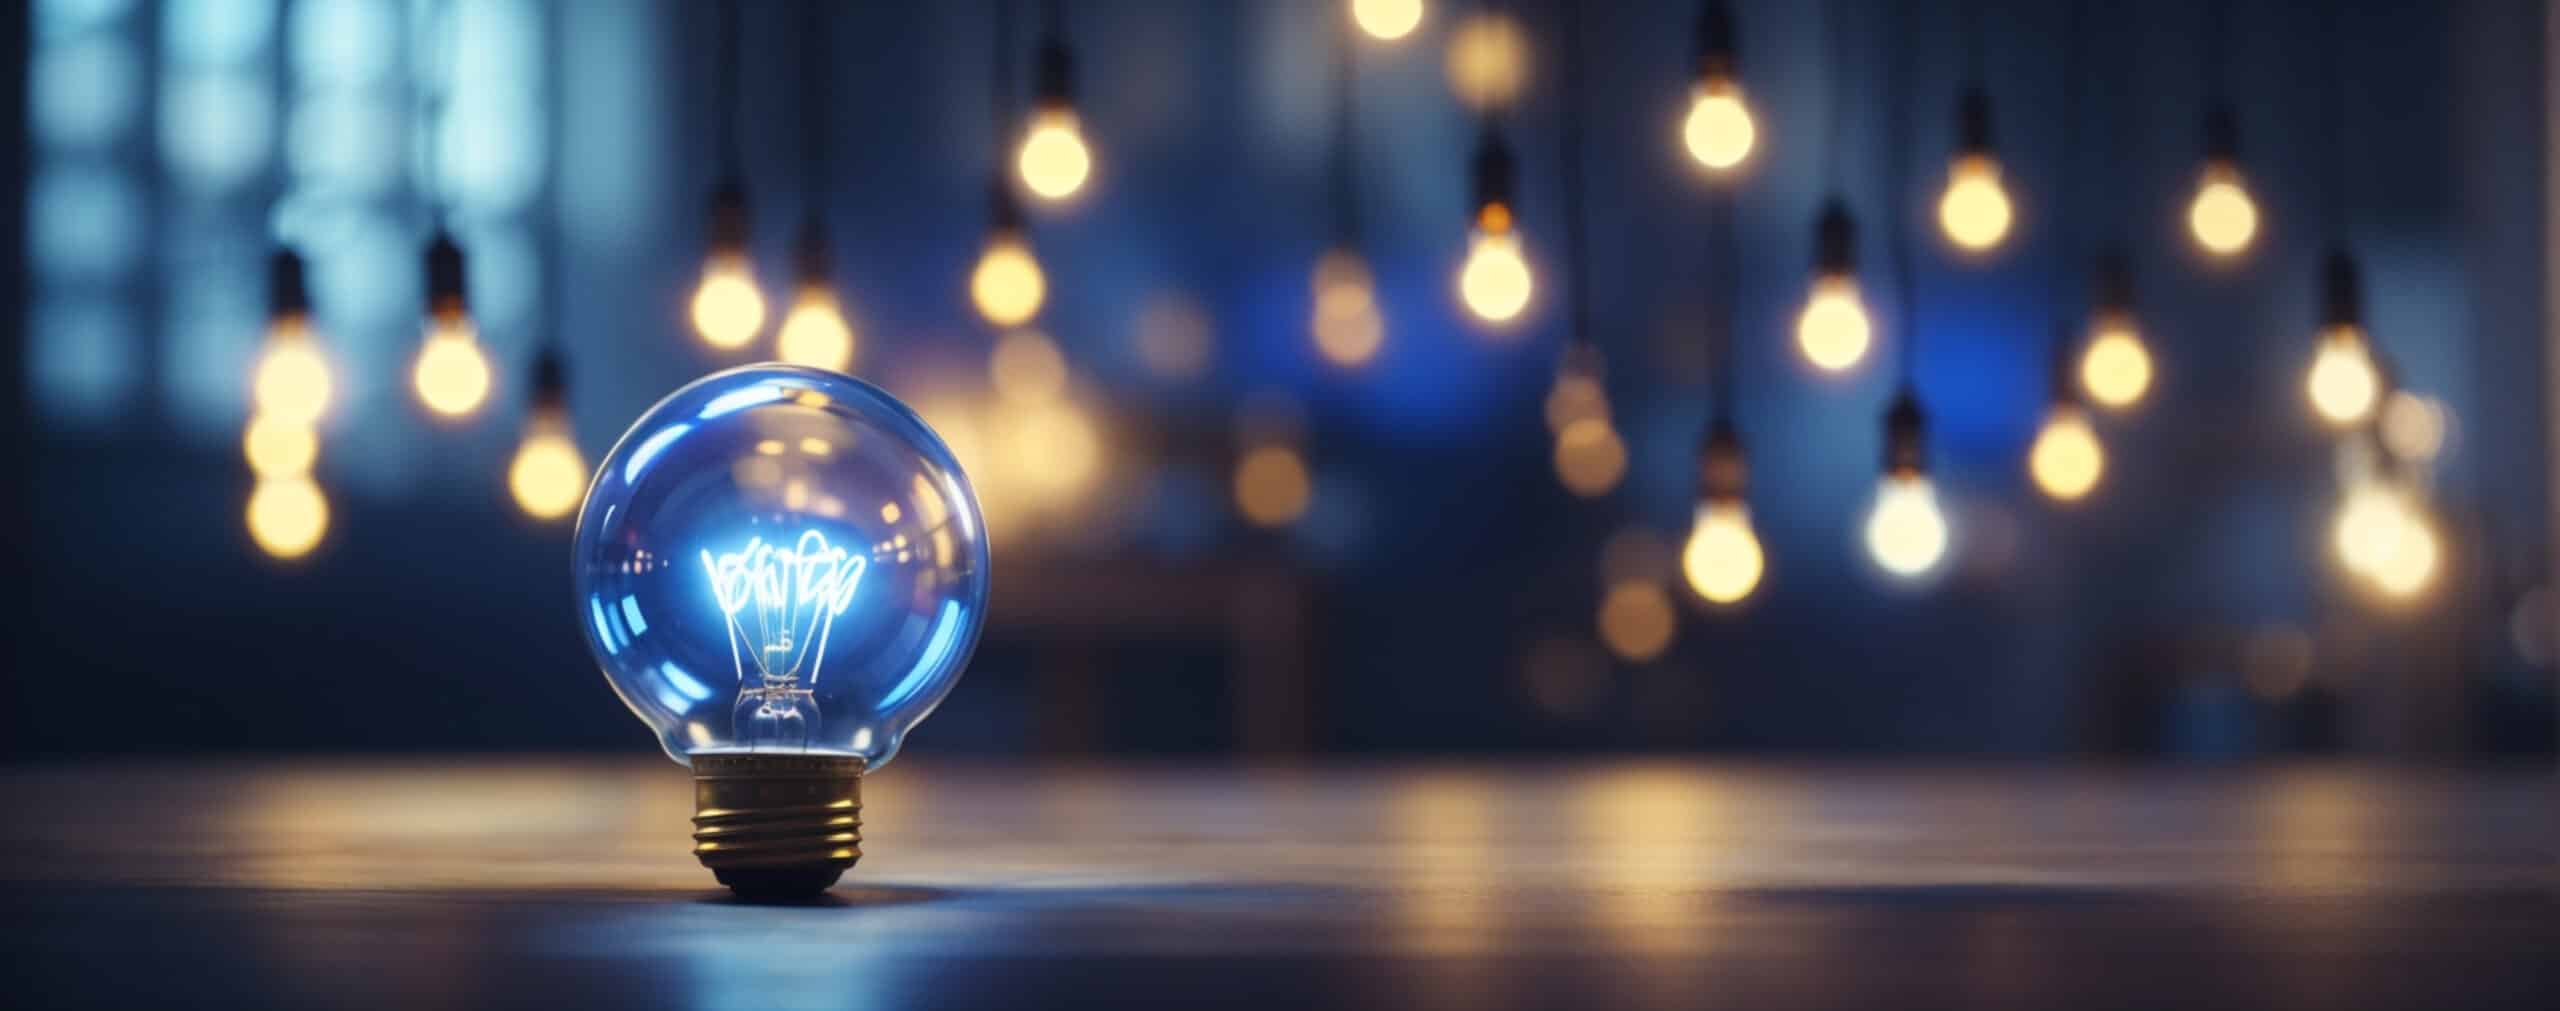 www.appr.com : How To Connect A Smart Light Bulb To Alexa?